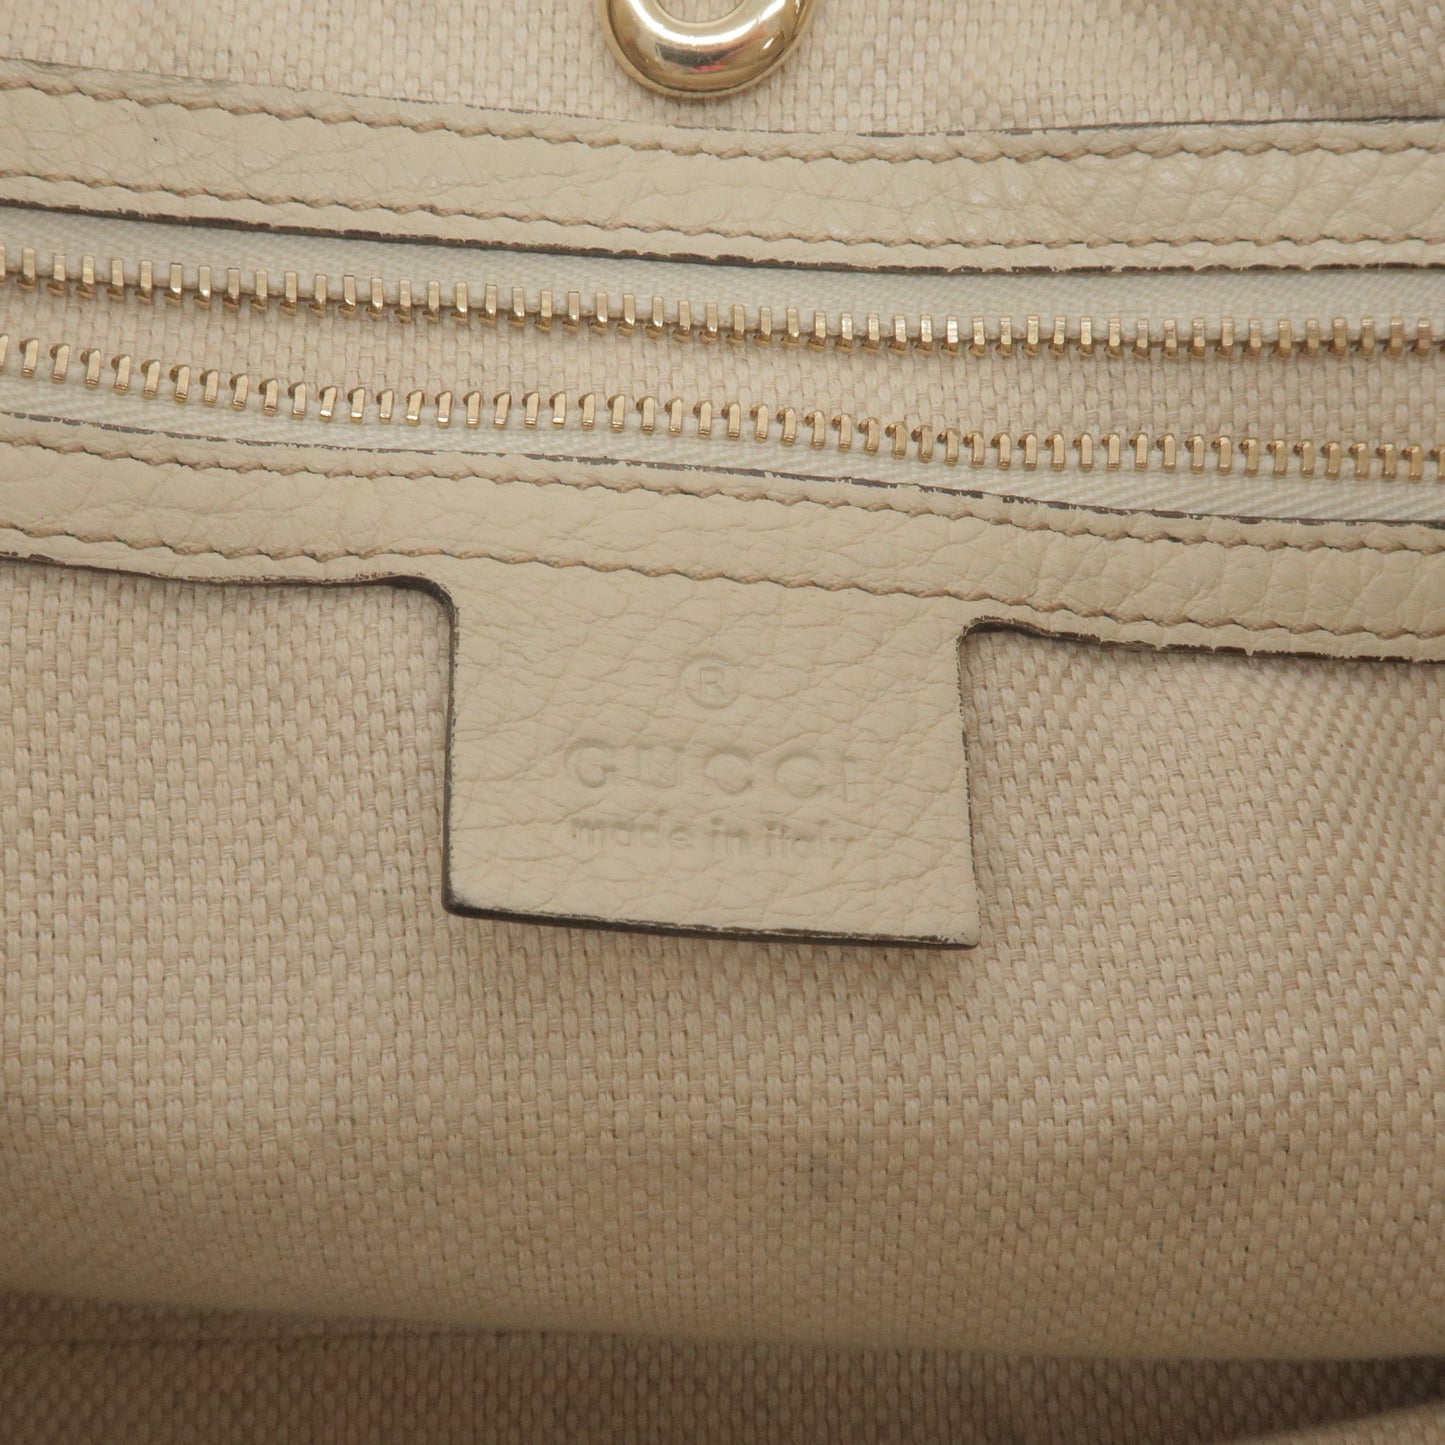 GUCCI SOHO Leather Chain Shoulder Bag Tote Bag Ivory 308982